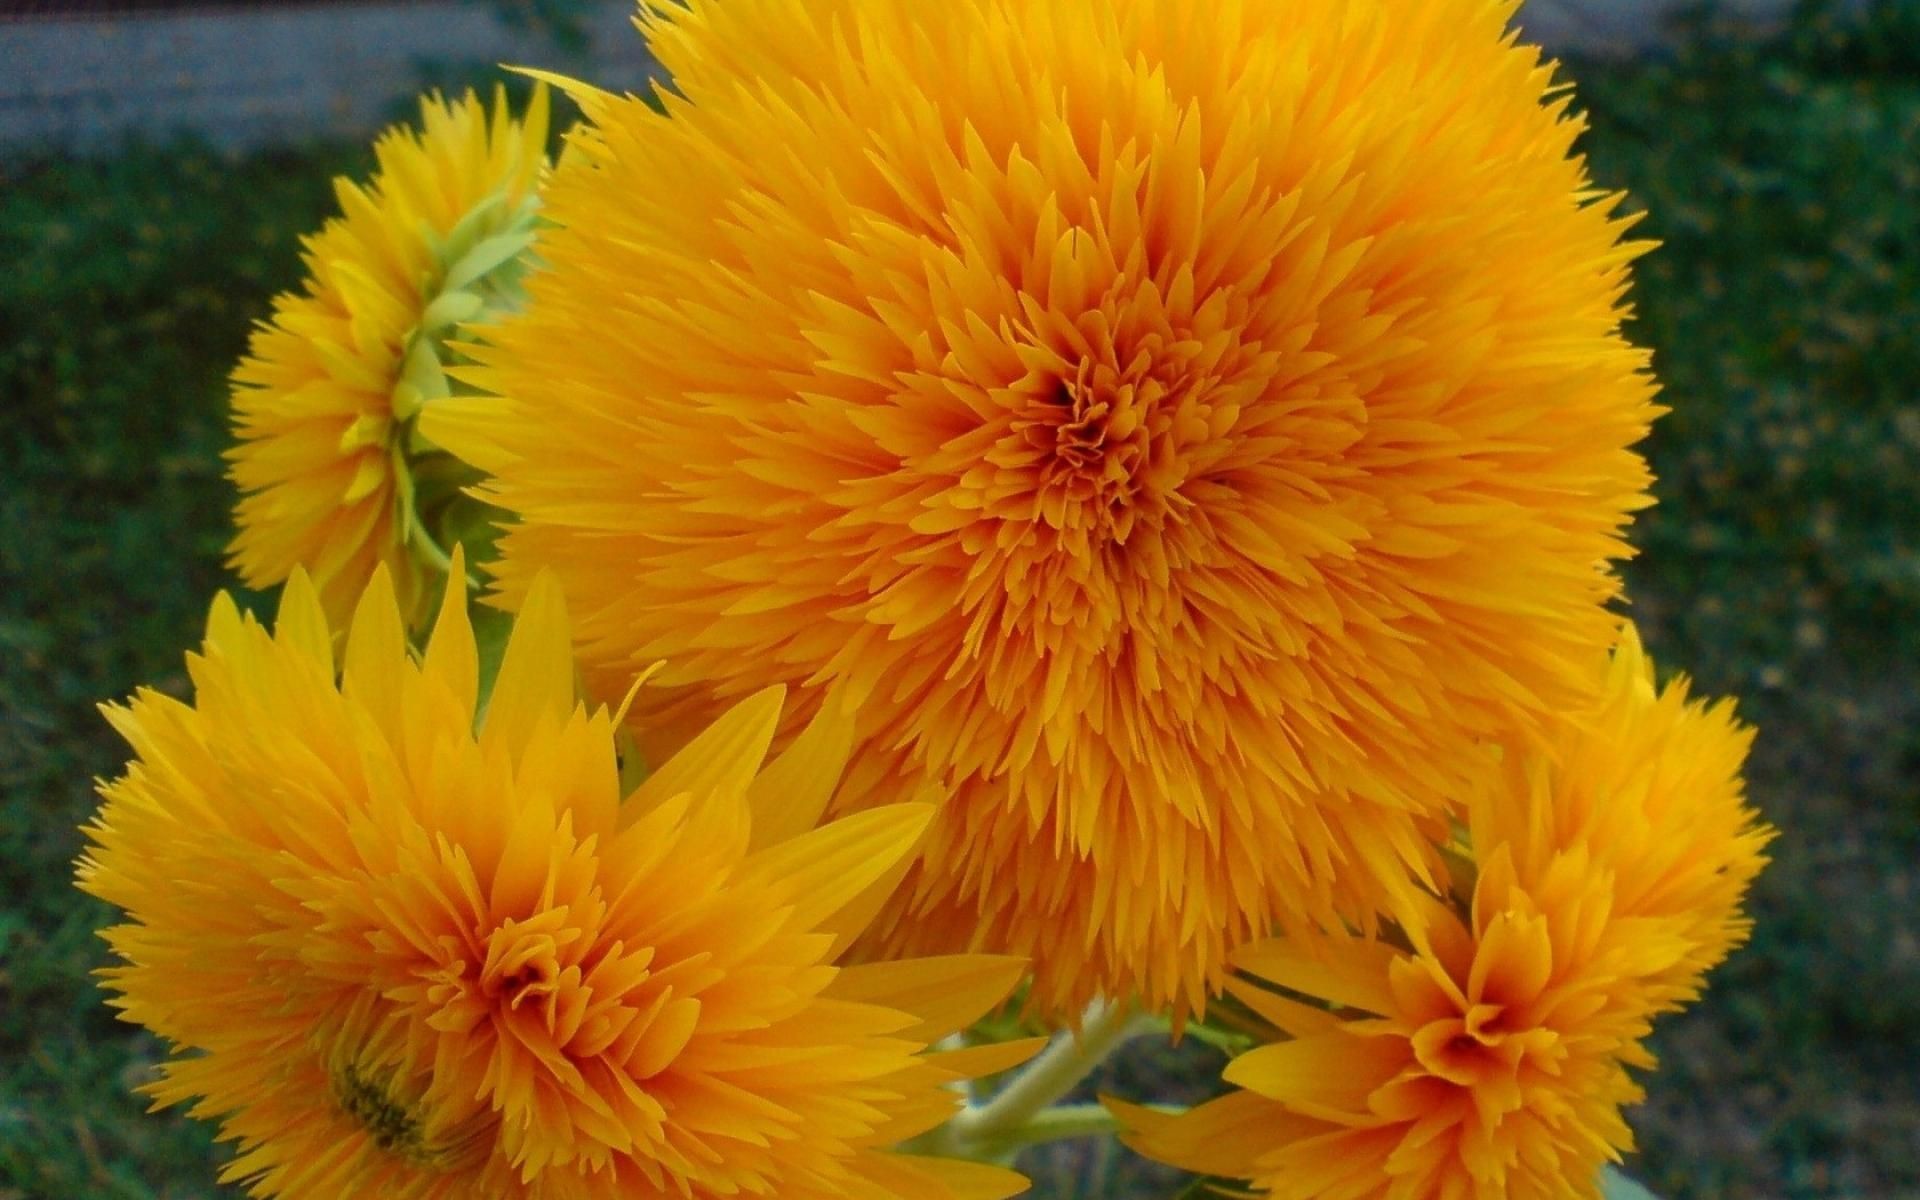 Nature Flowers Yellow Orange Colors Hd Wallpaper - Flower Image Hd Free Download - HD Wallpaper 